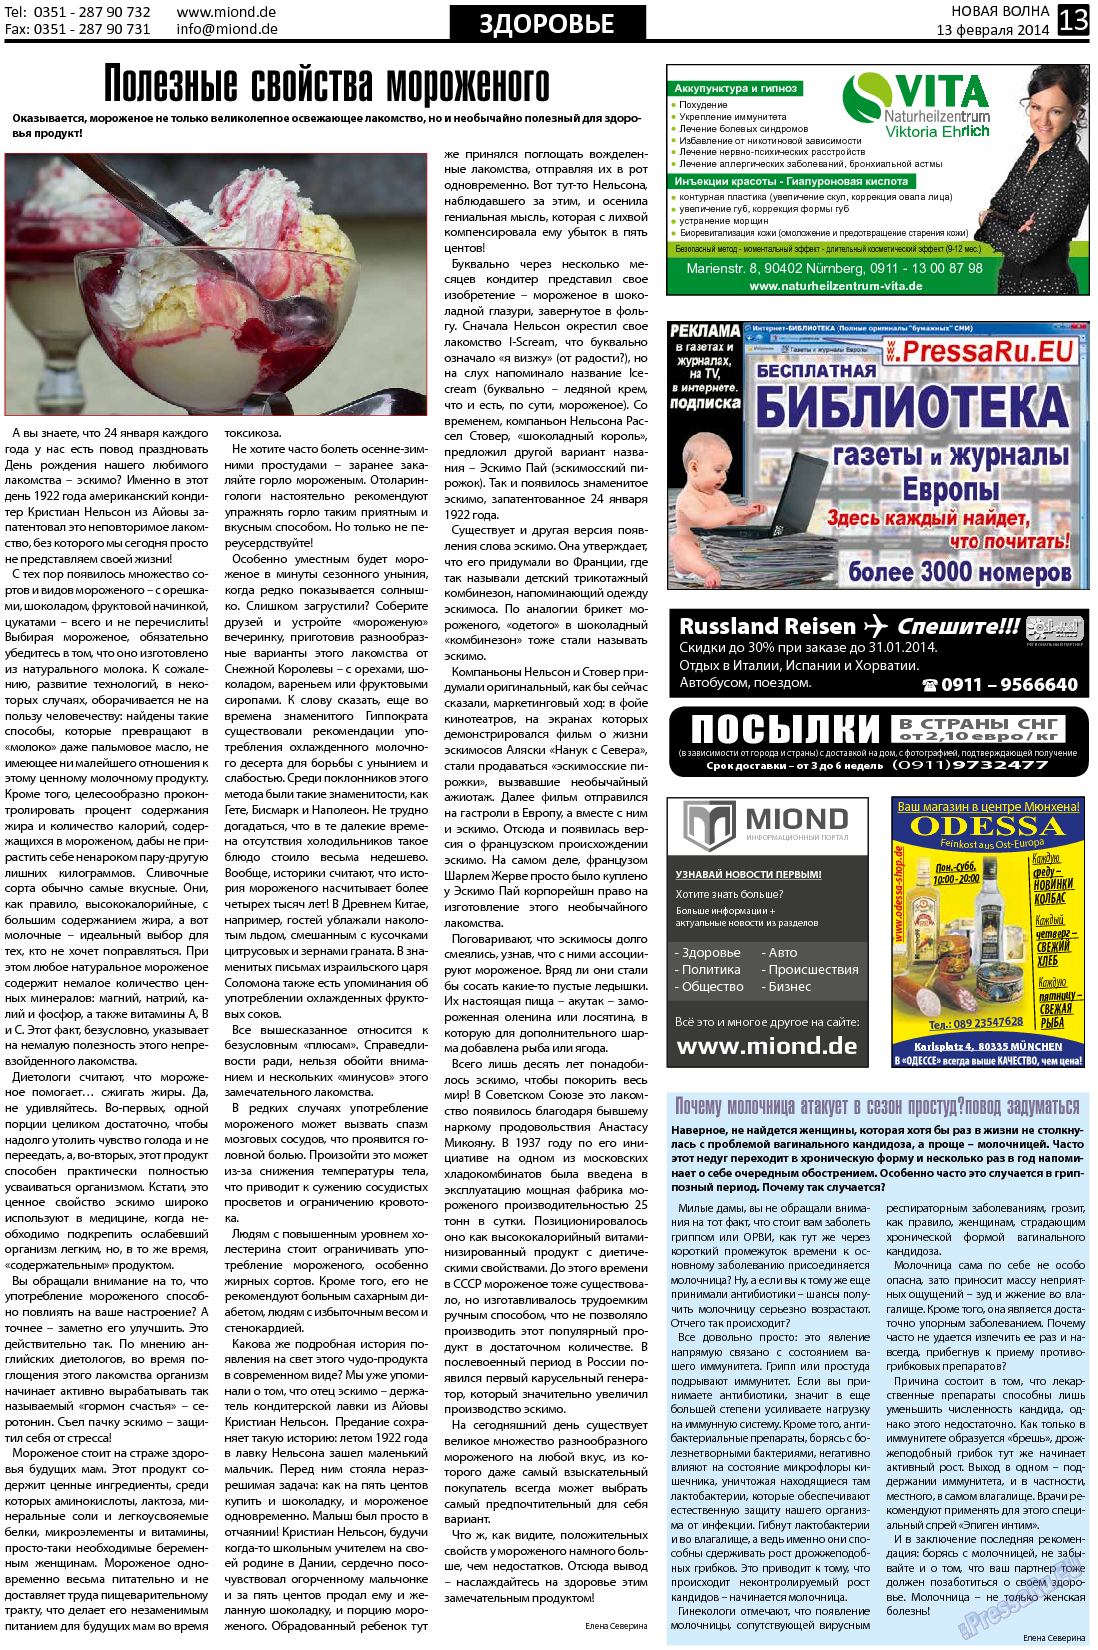 Новая Wолна, газета. 2014 №7 стр.13